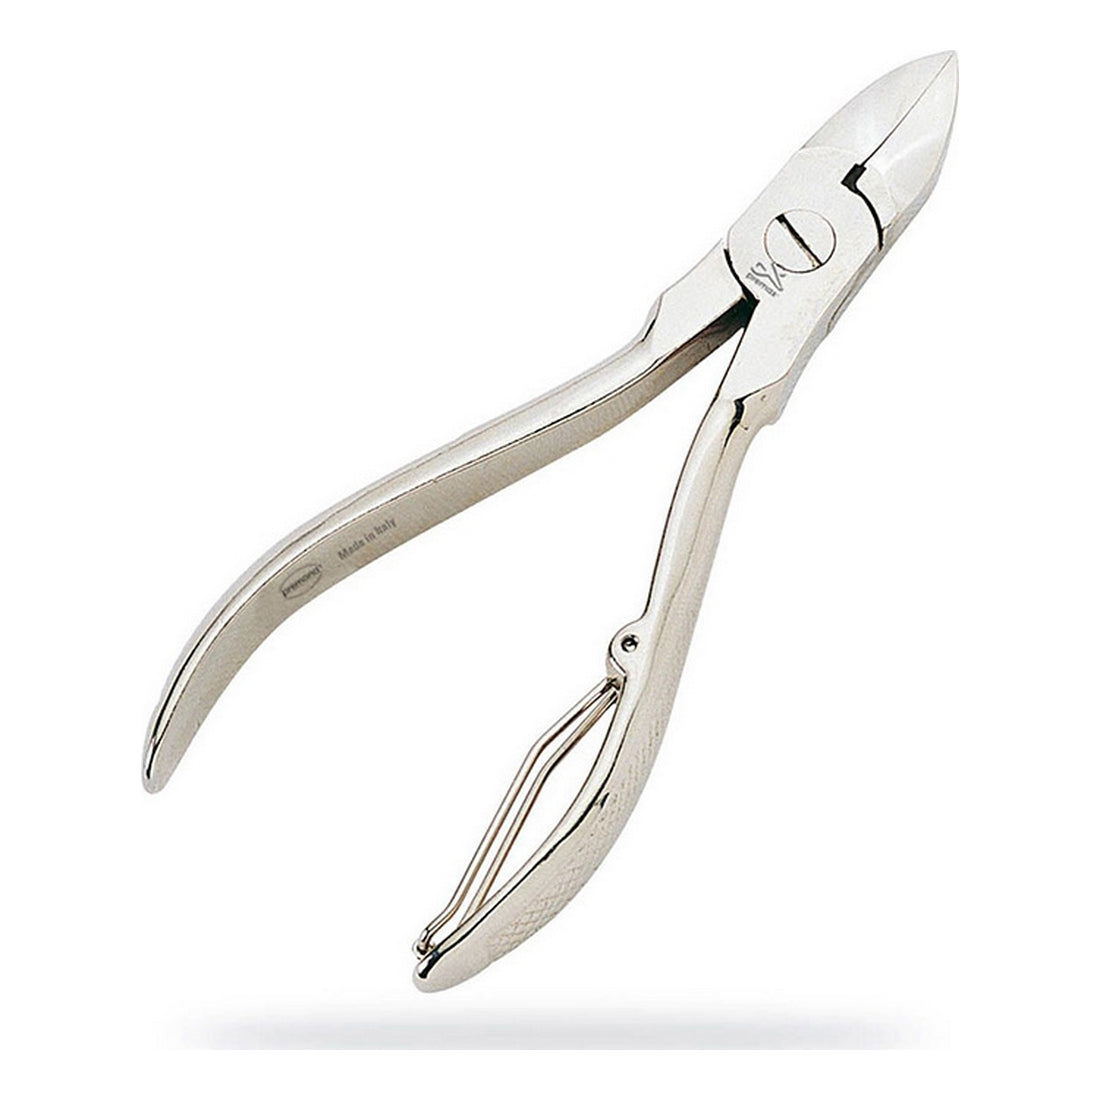 Nail clippers Premax (12 cm)